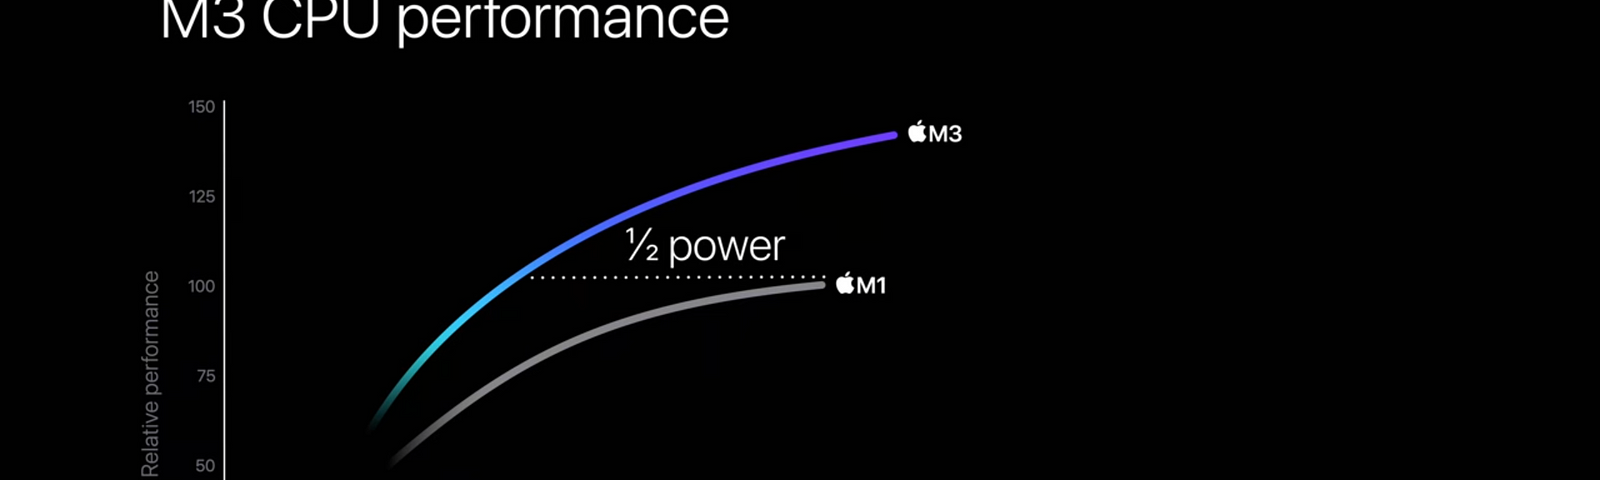 M3 vs M1 performance graph